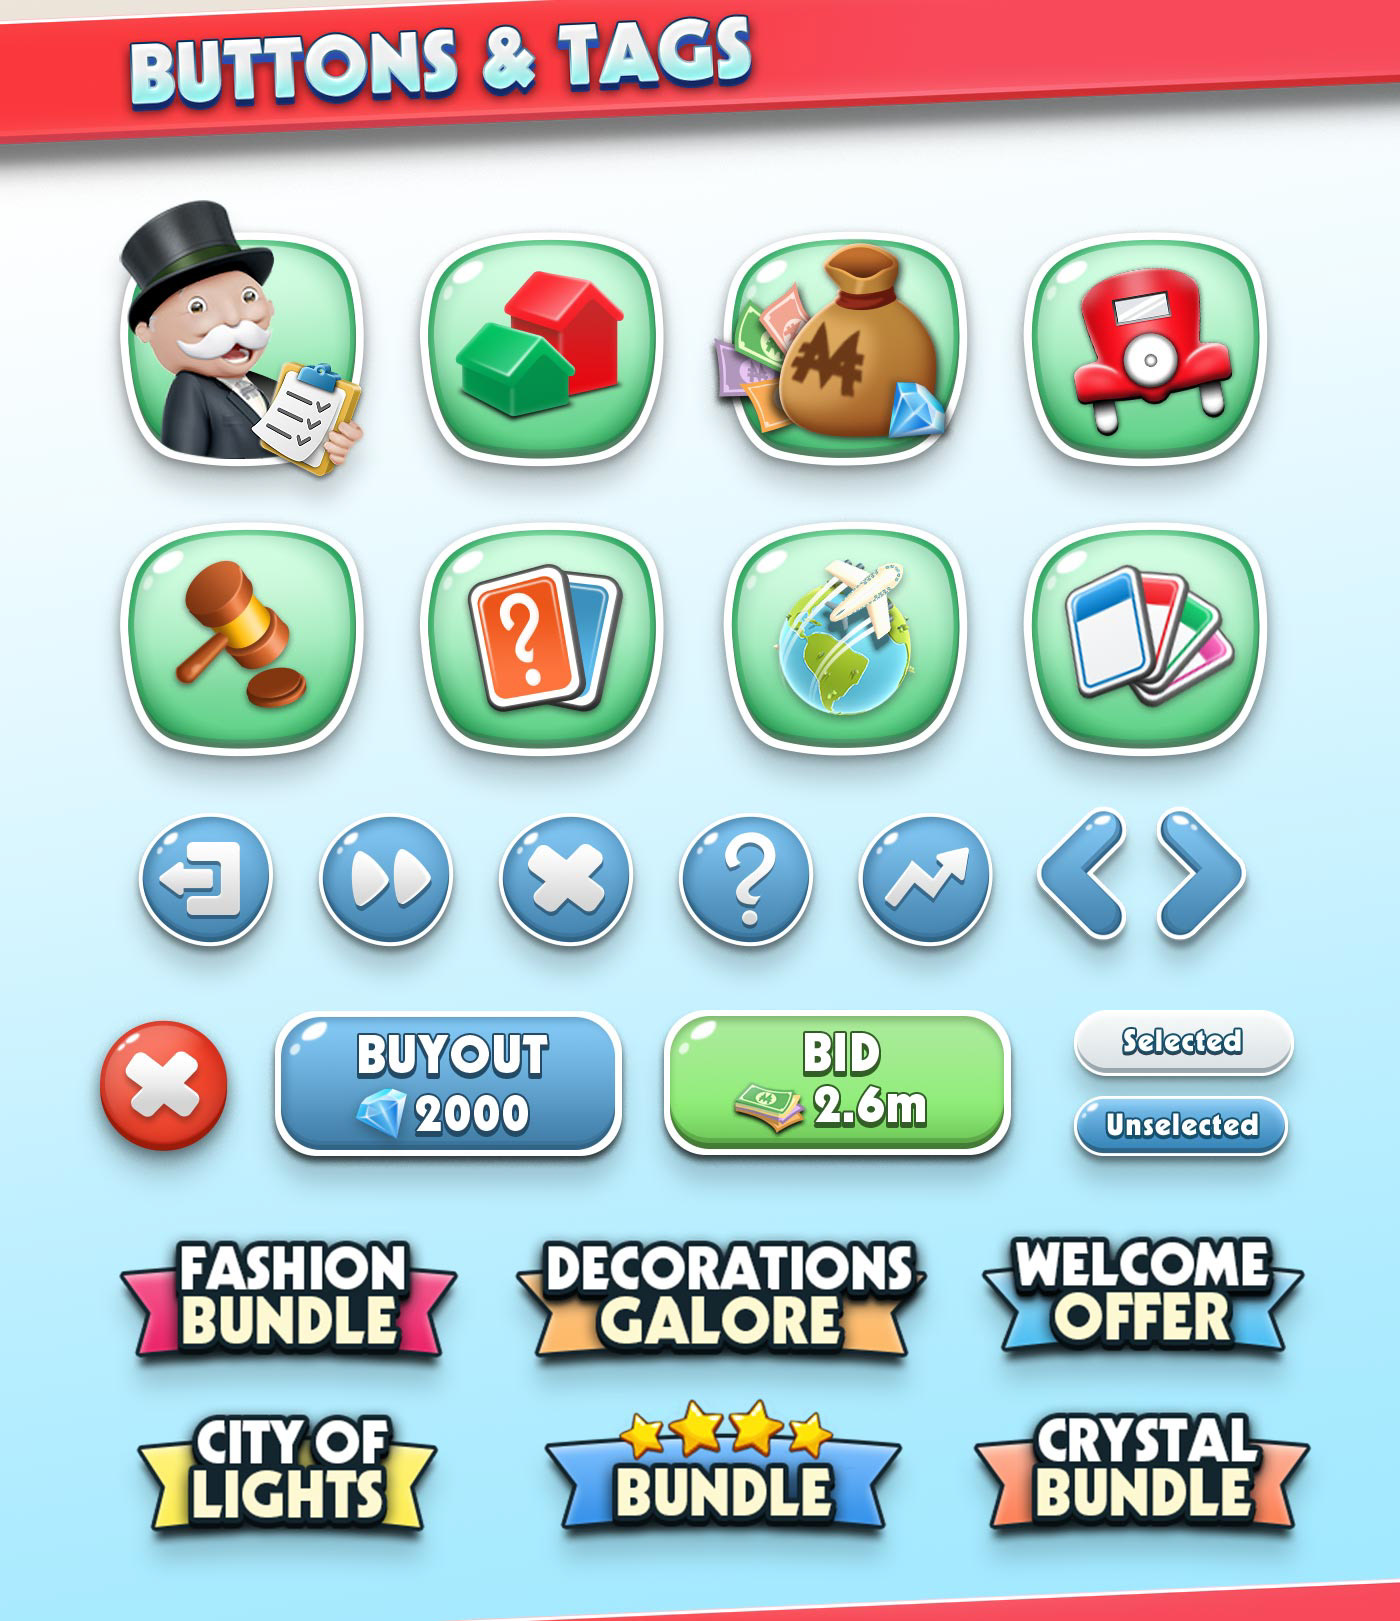 Hasbro Monopoly UI ux casual game Game Art mobile game ui design GUI icons